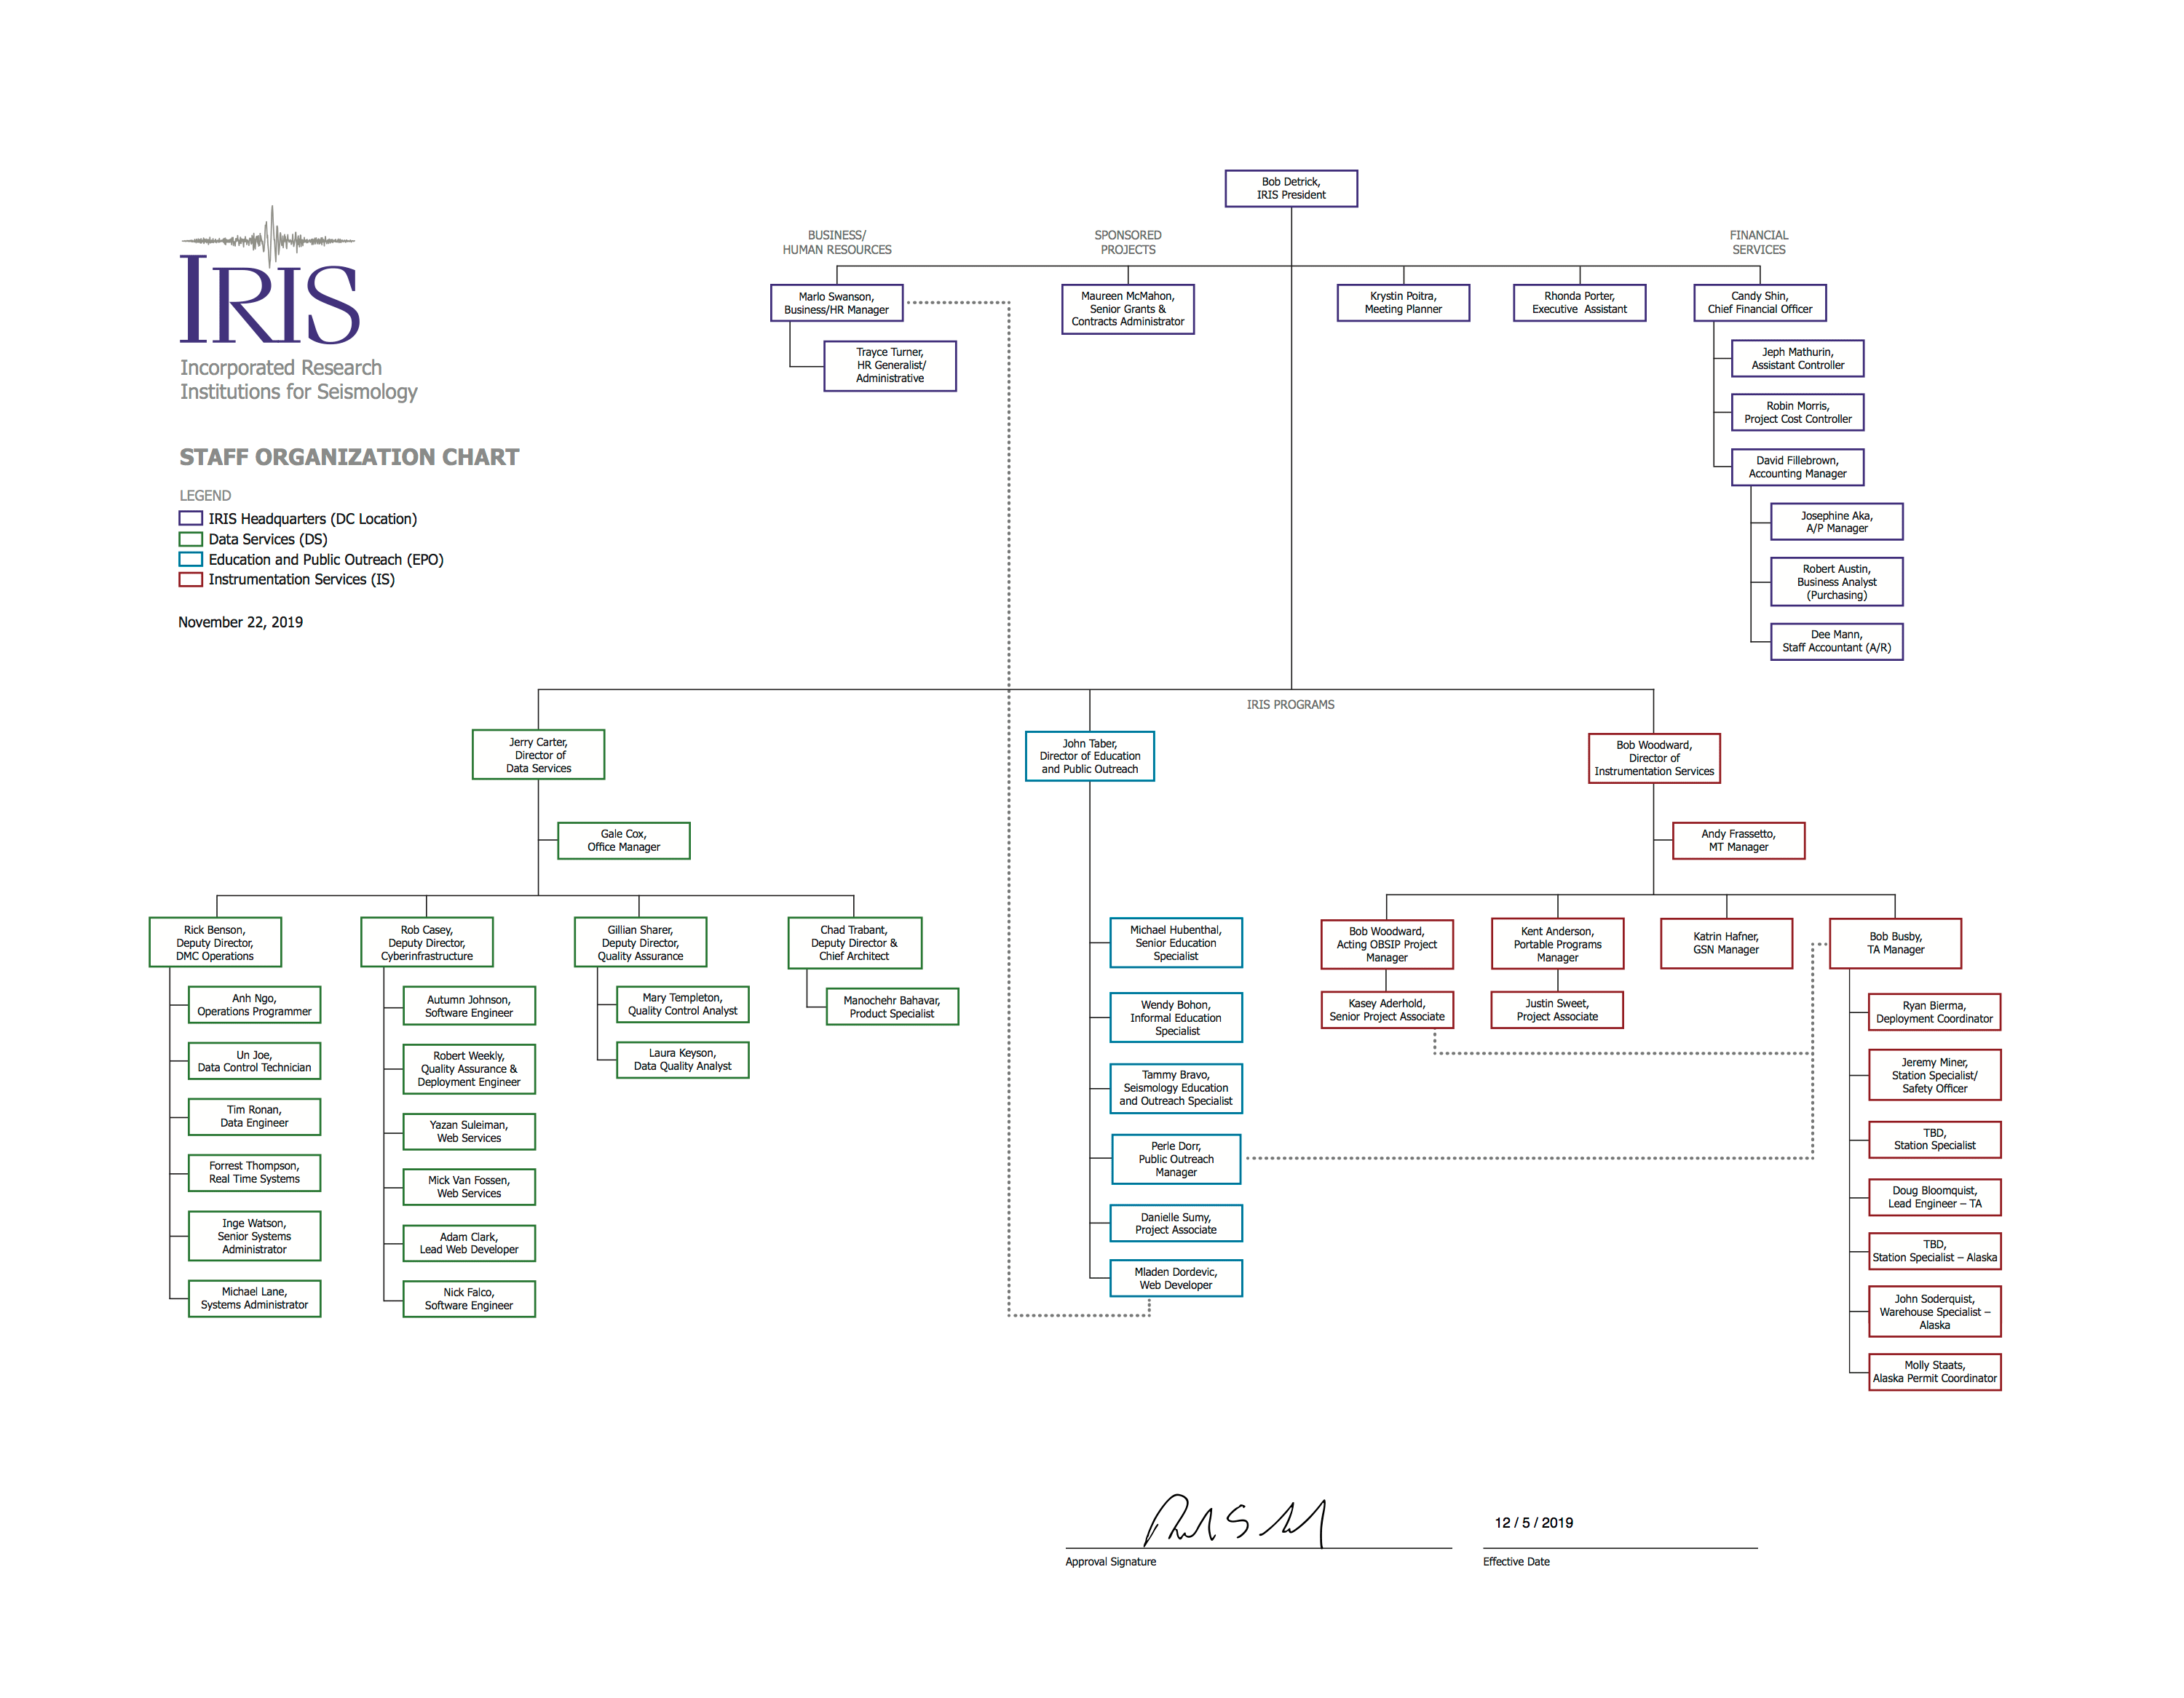 University Of Delaware Organizational Chart